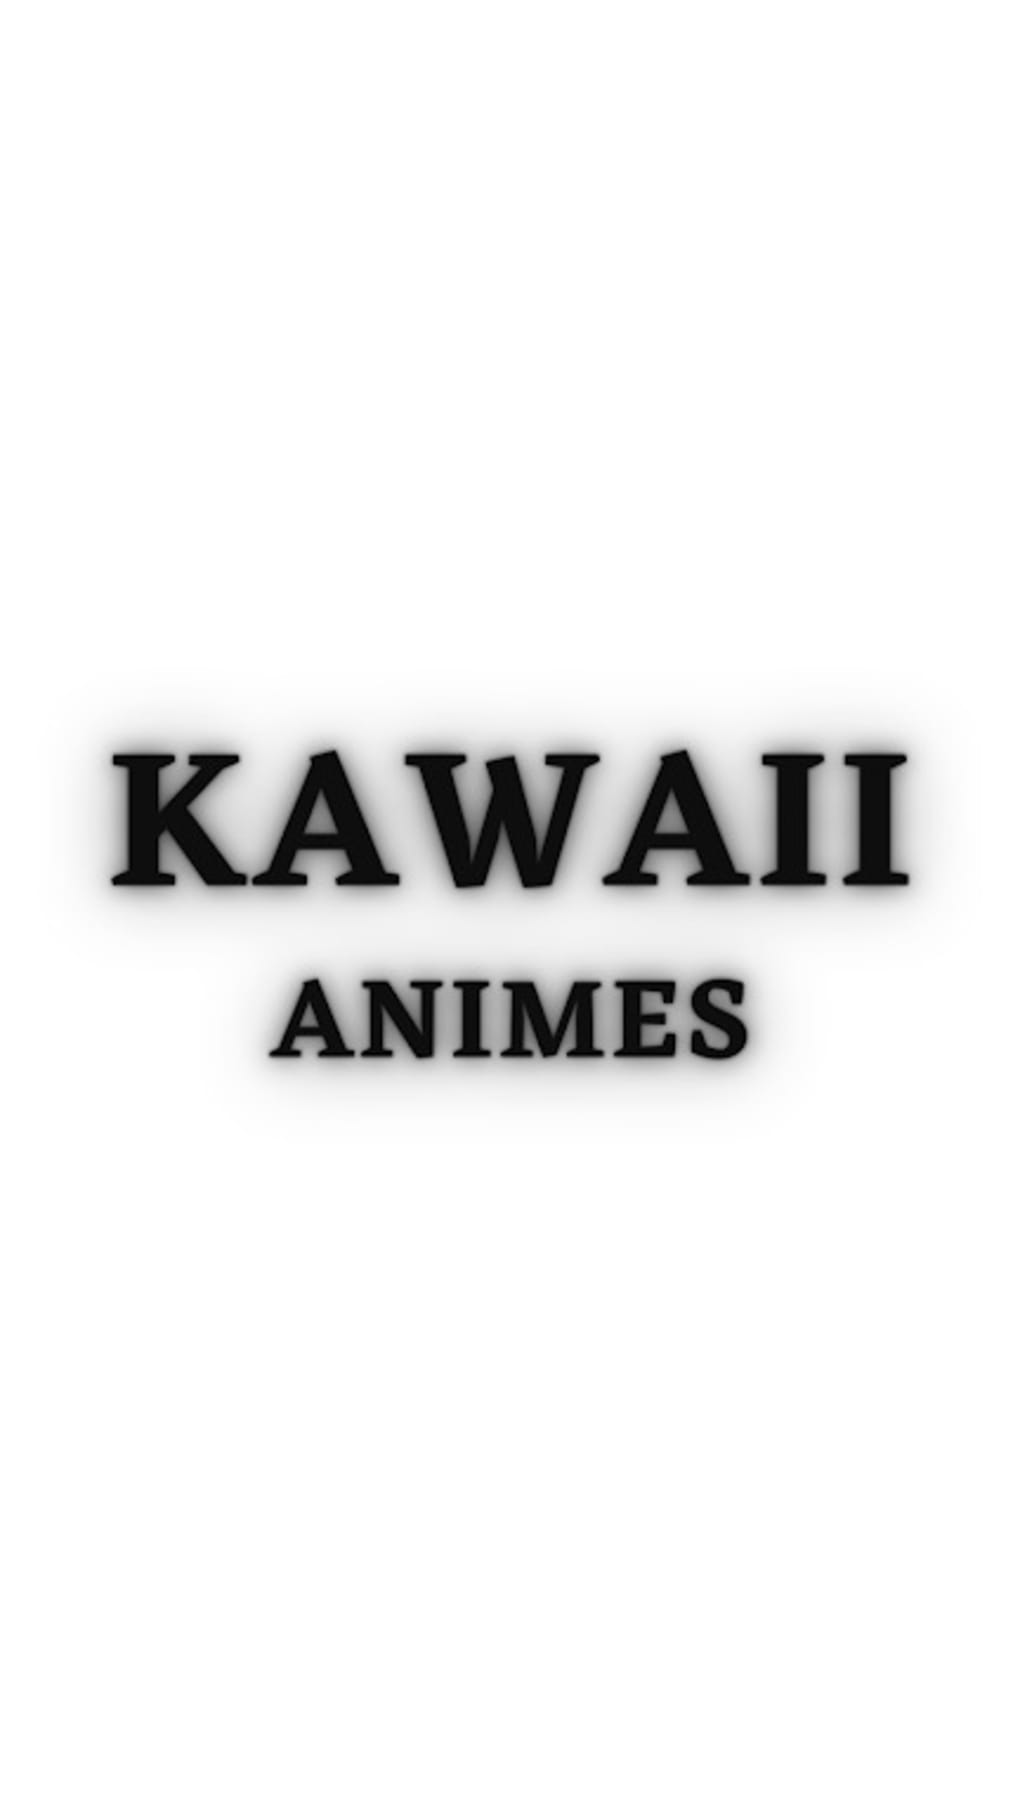 Kawaii Animes - Apps on Google Play